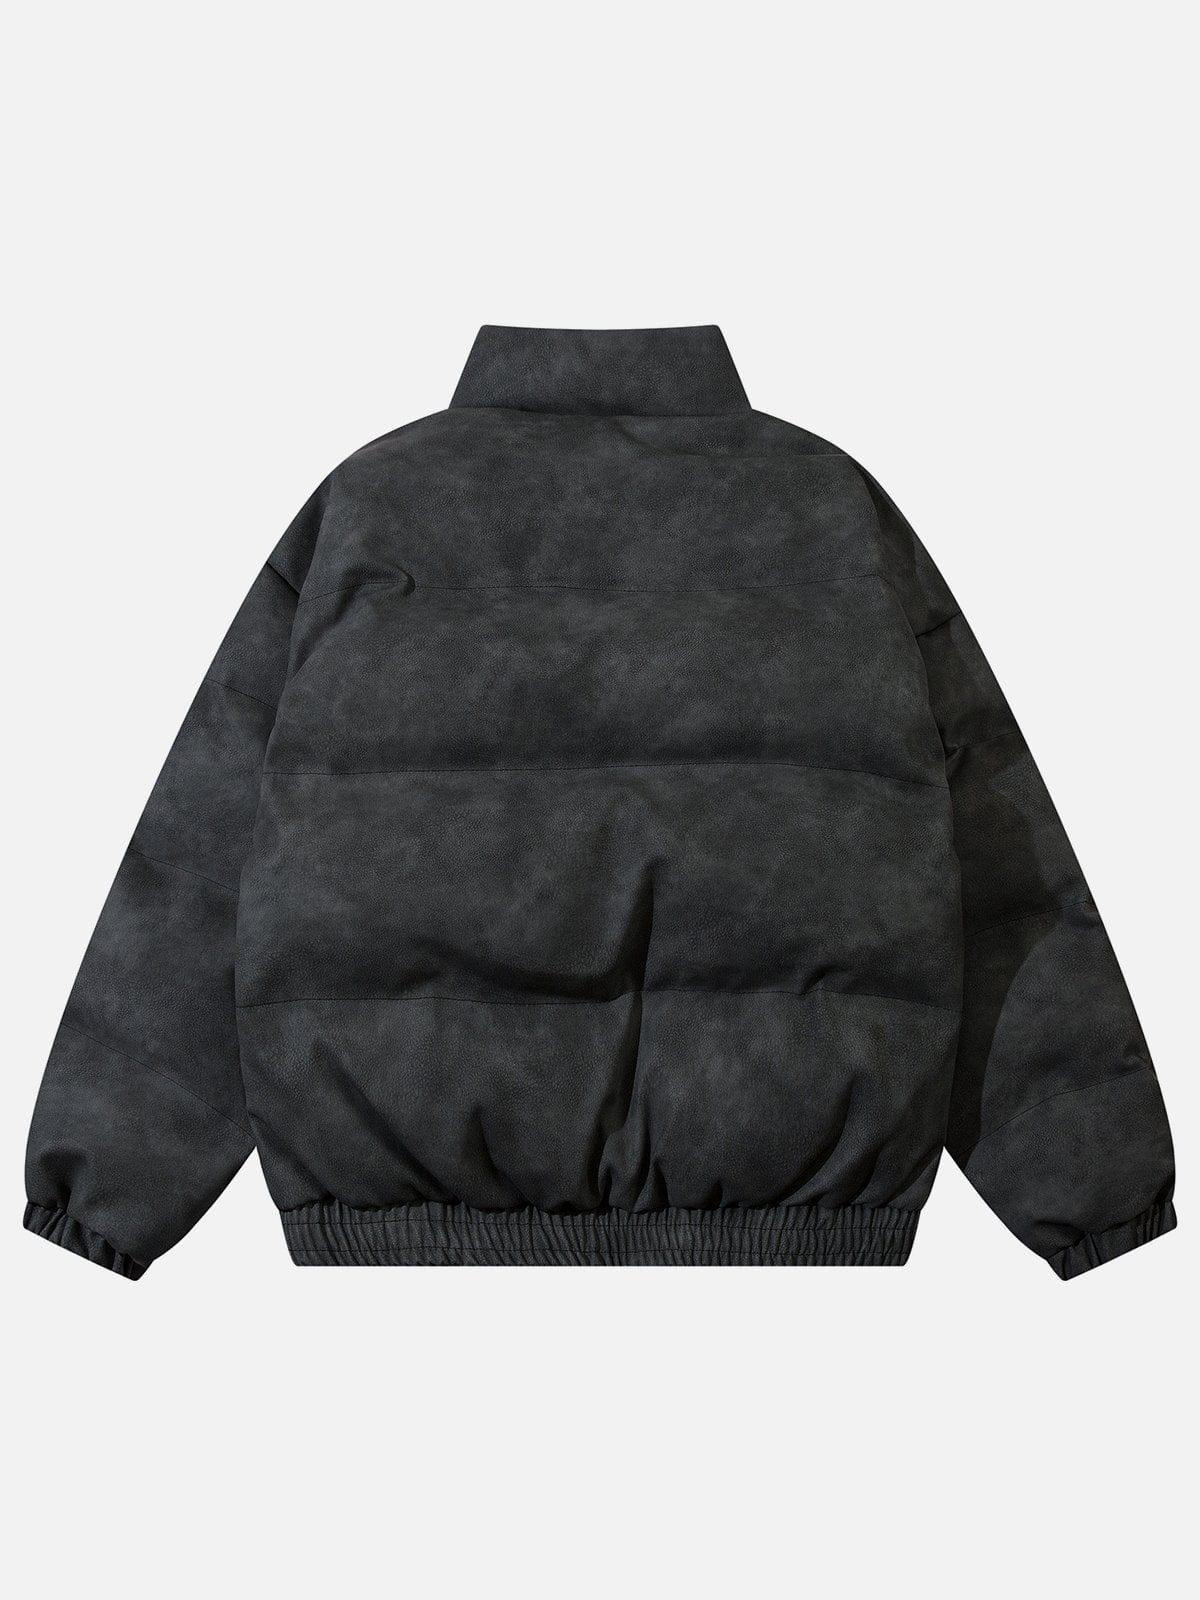 ZIP UP Multi-pocket Leather Winter Coat